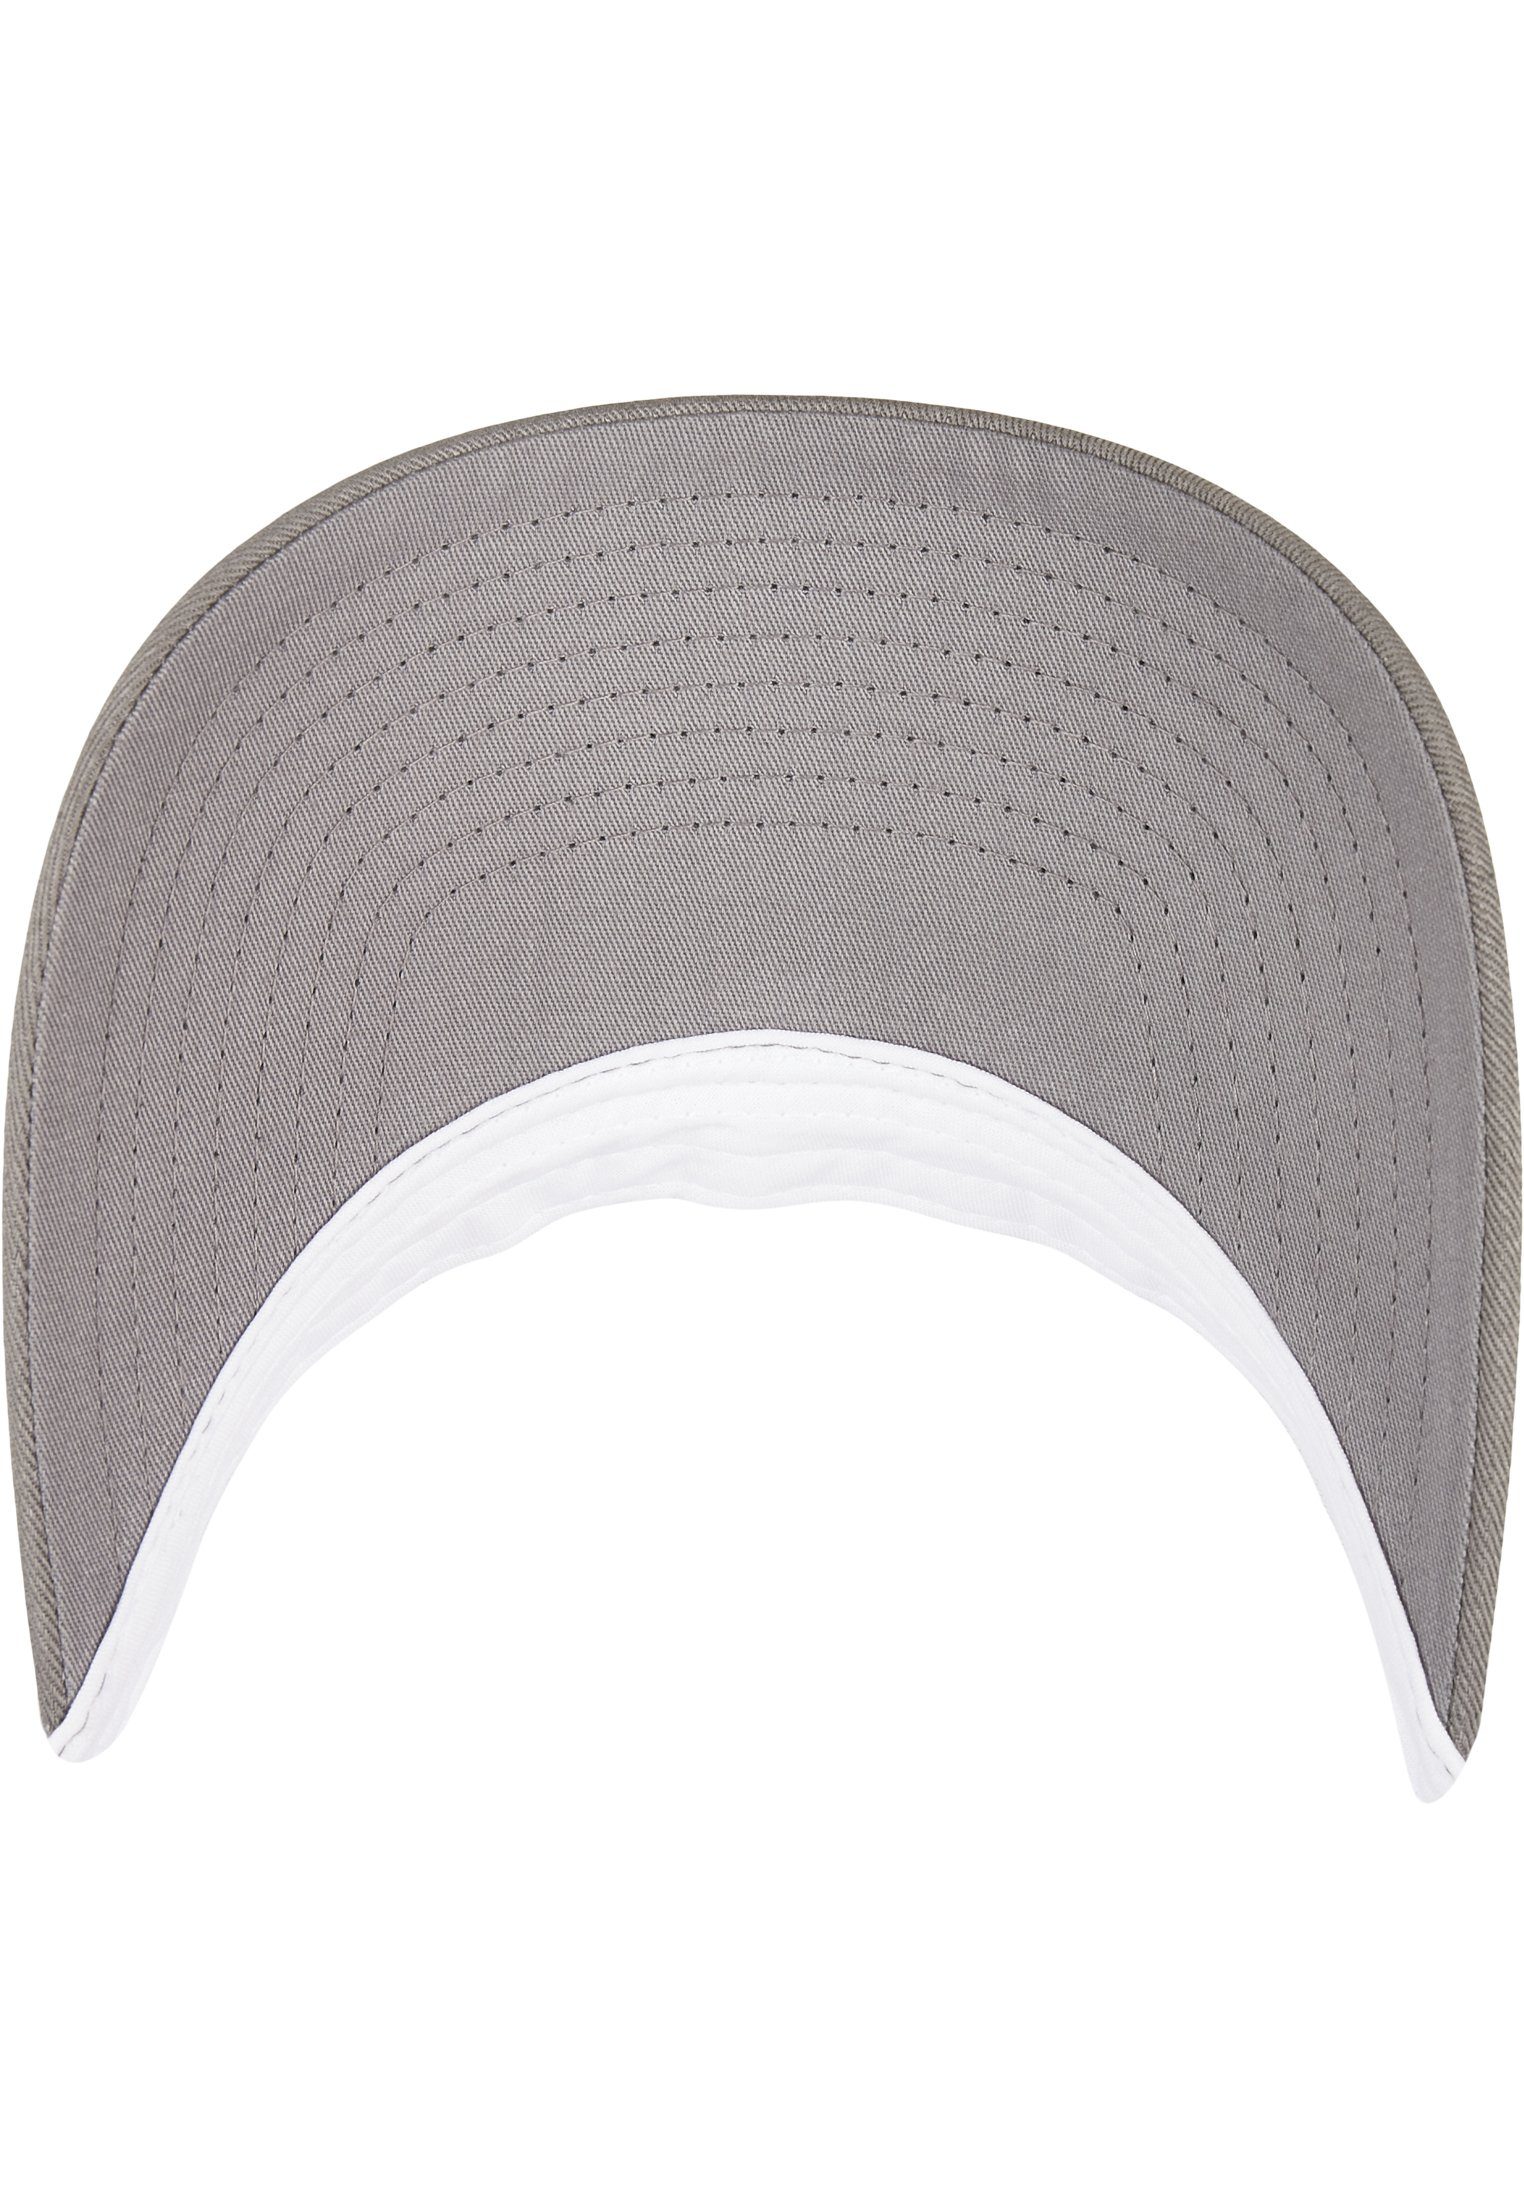 CAP grey/white TRUCKER Caps YP Flex CLASSICS RETRO Cap Flexfit 2-TONE RECYCLED